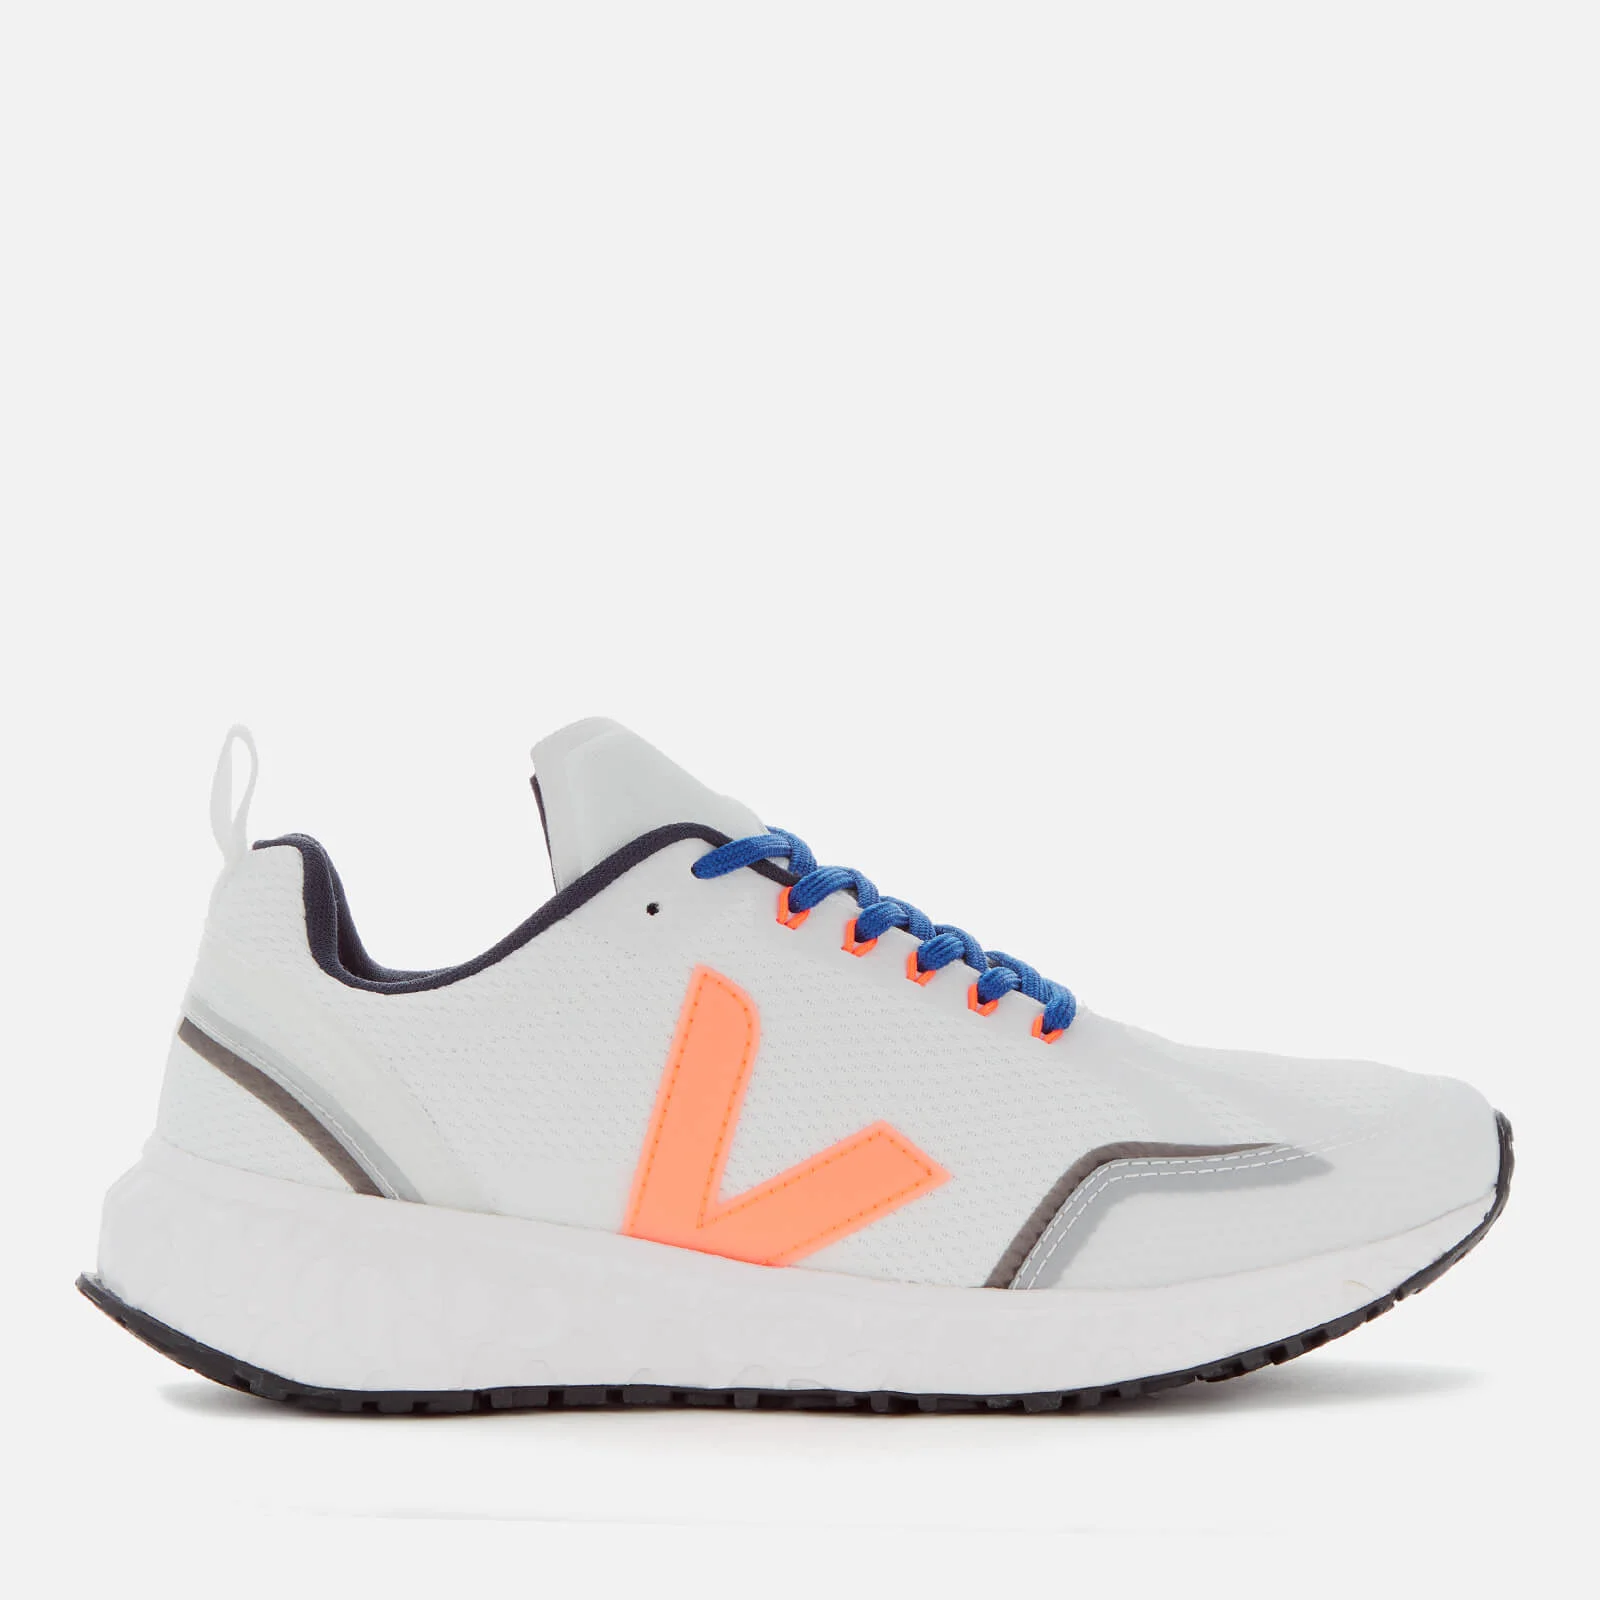 Veja Men's The Condor Running Shoes - White/Orange Image 1